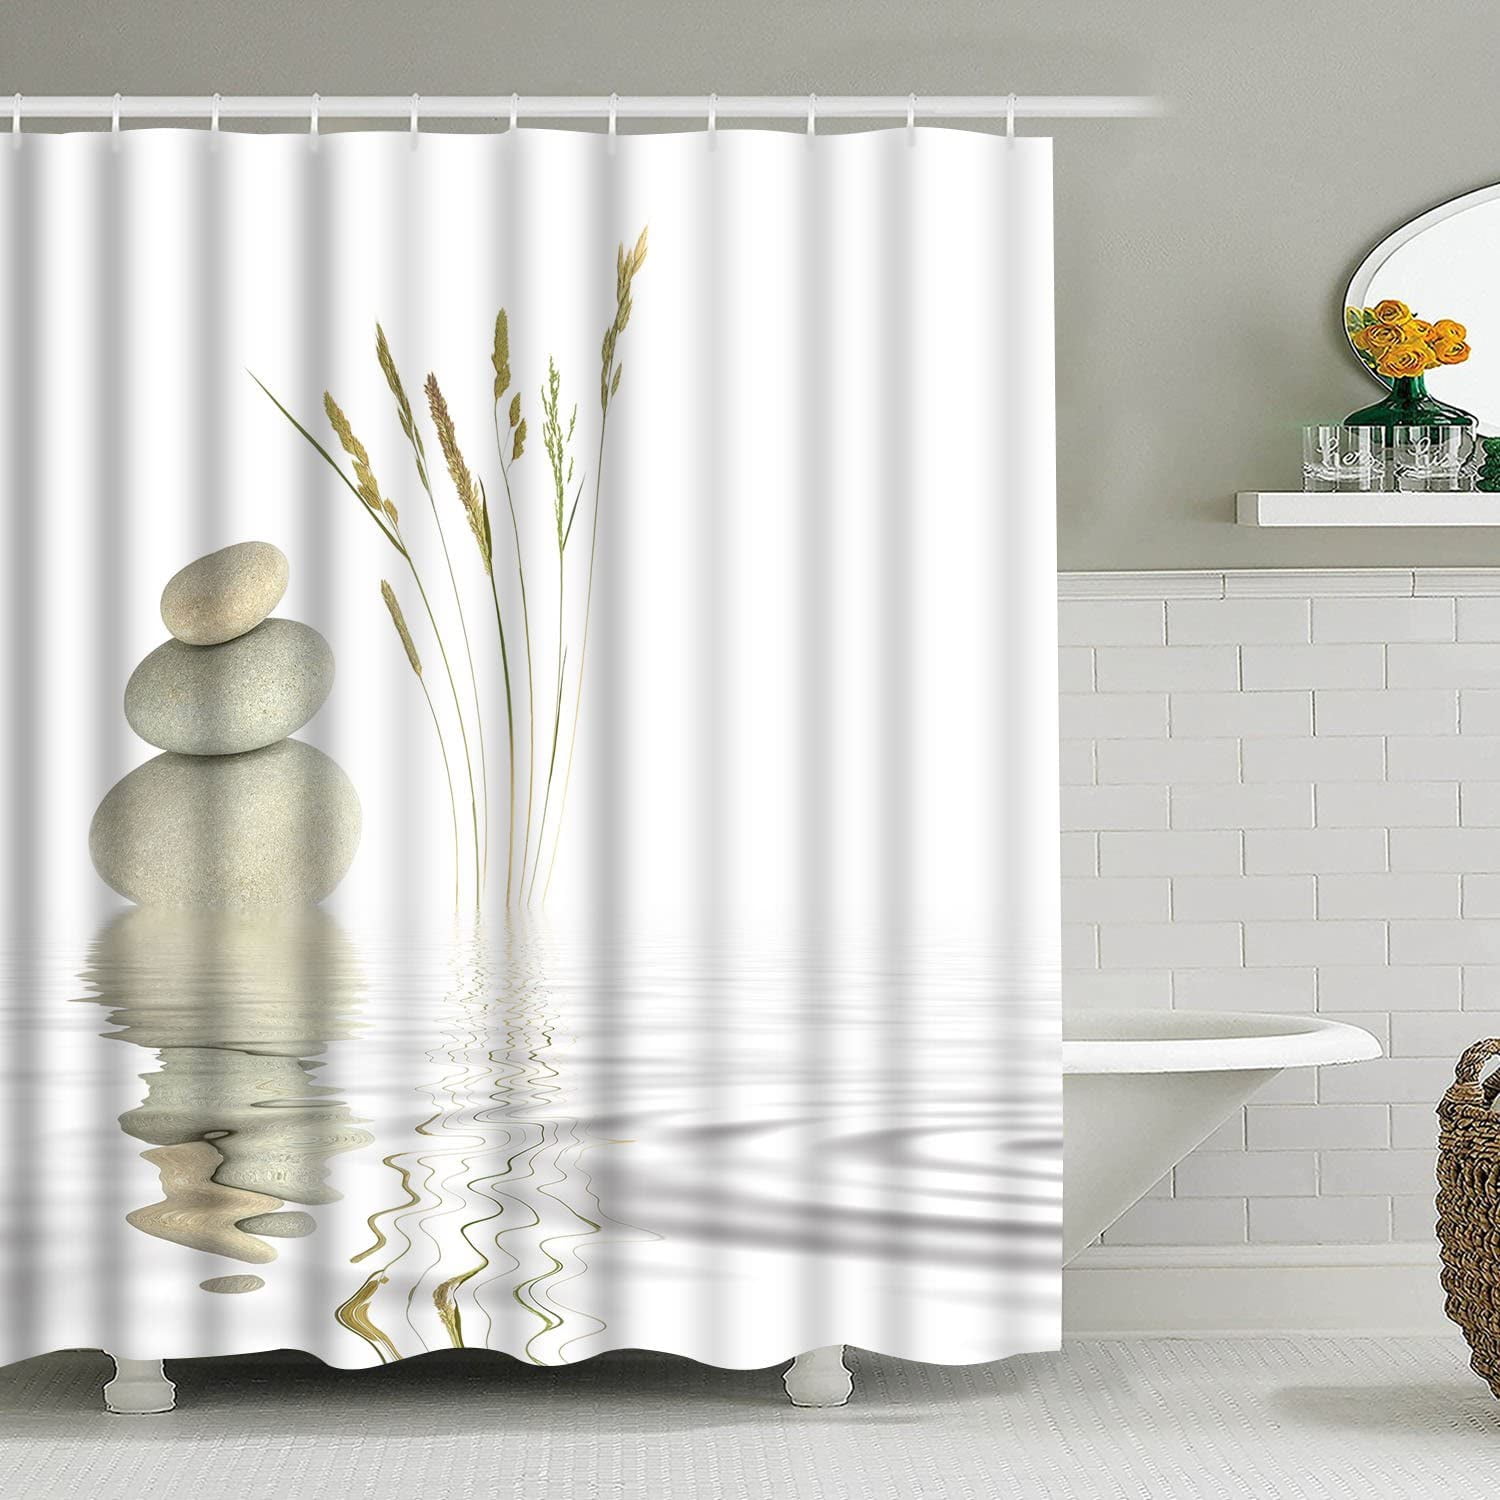 Butterflies and pebbles Shower Curtain Bedroom Decor Waterproof Fabric & 12Hooks 